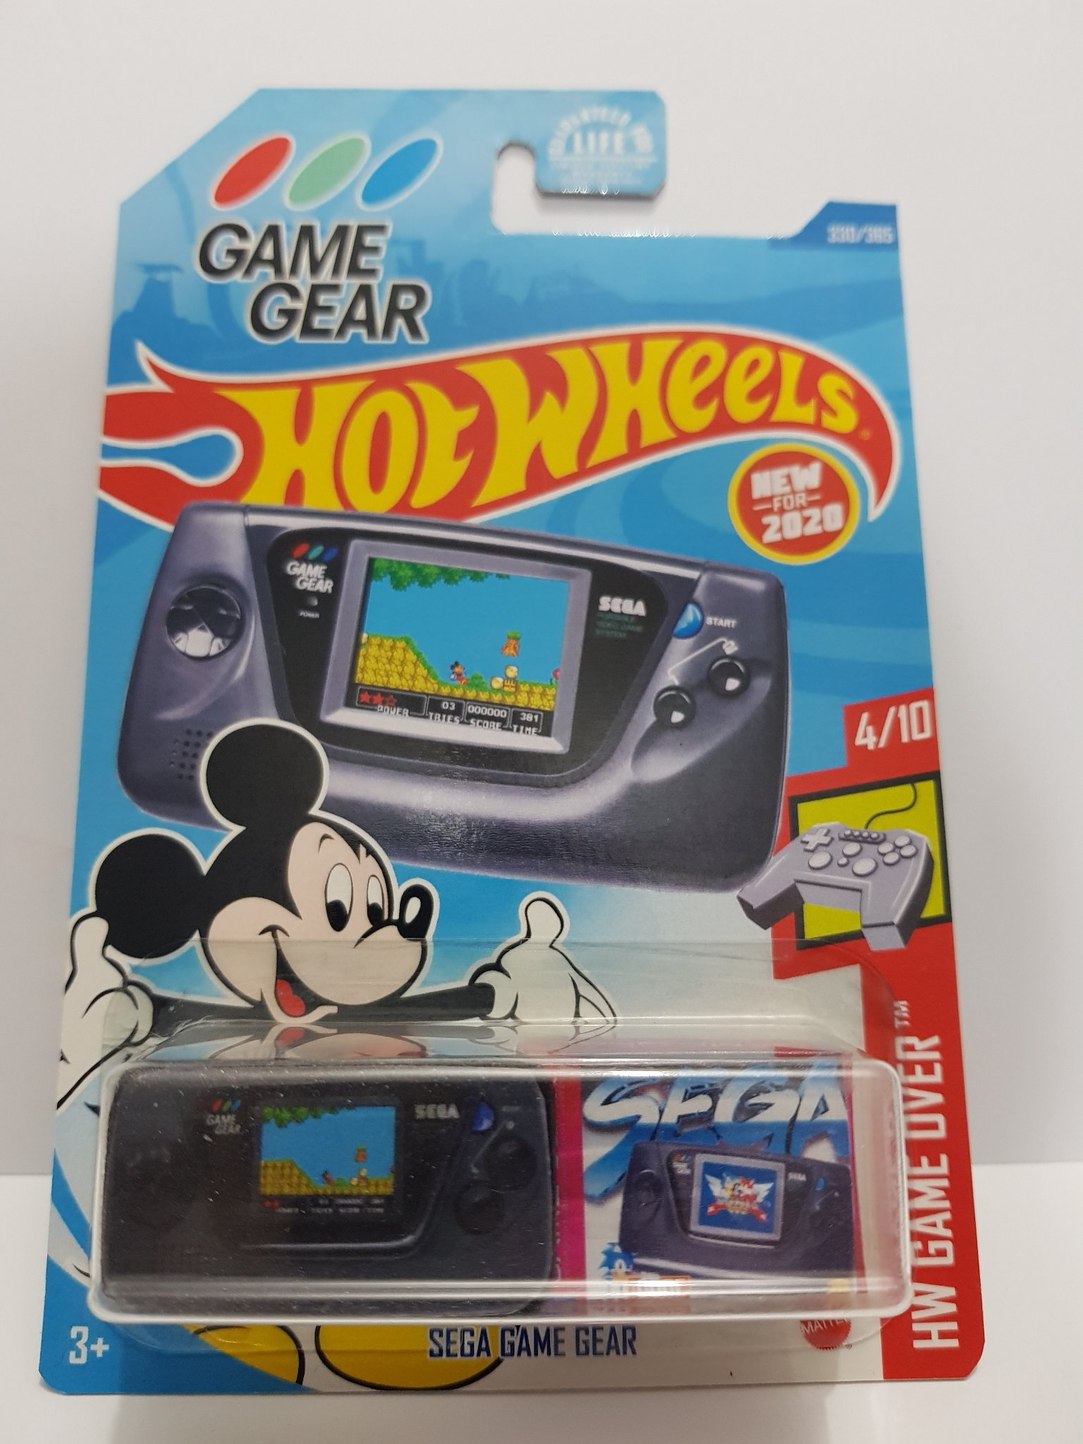 Sega game gear hotwheels - meme